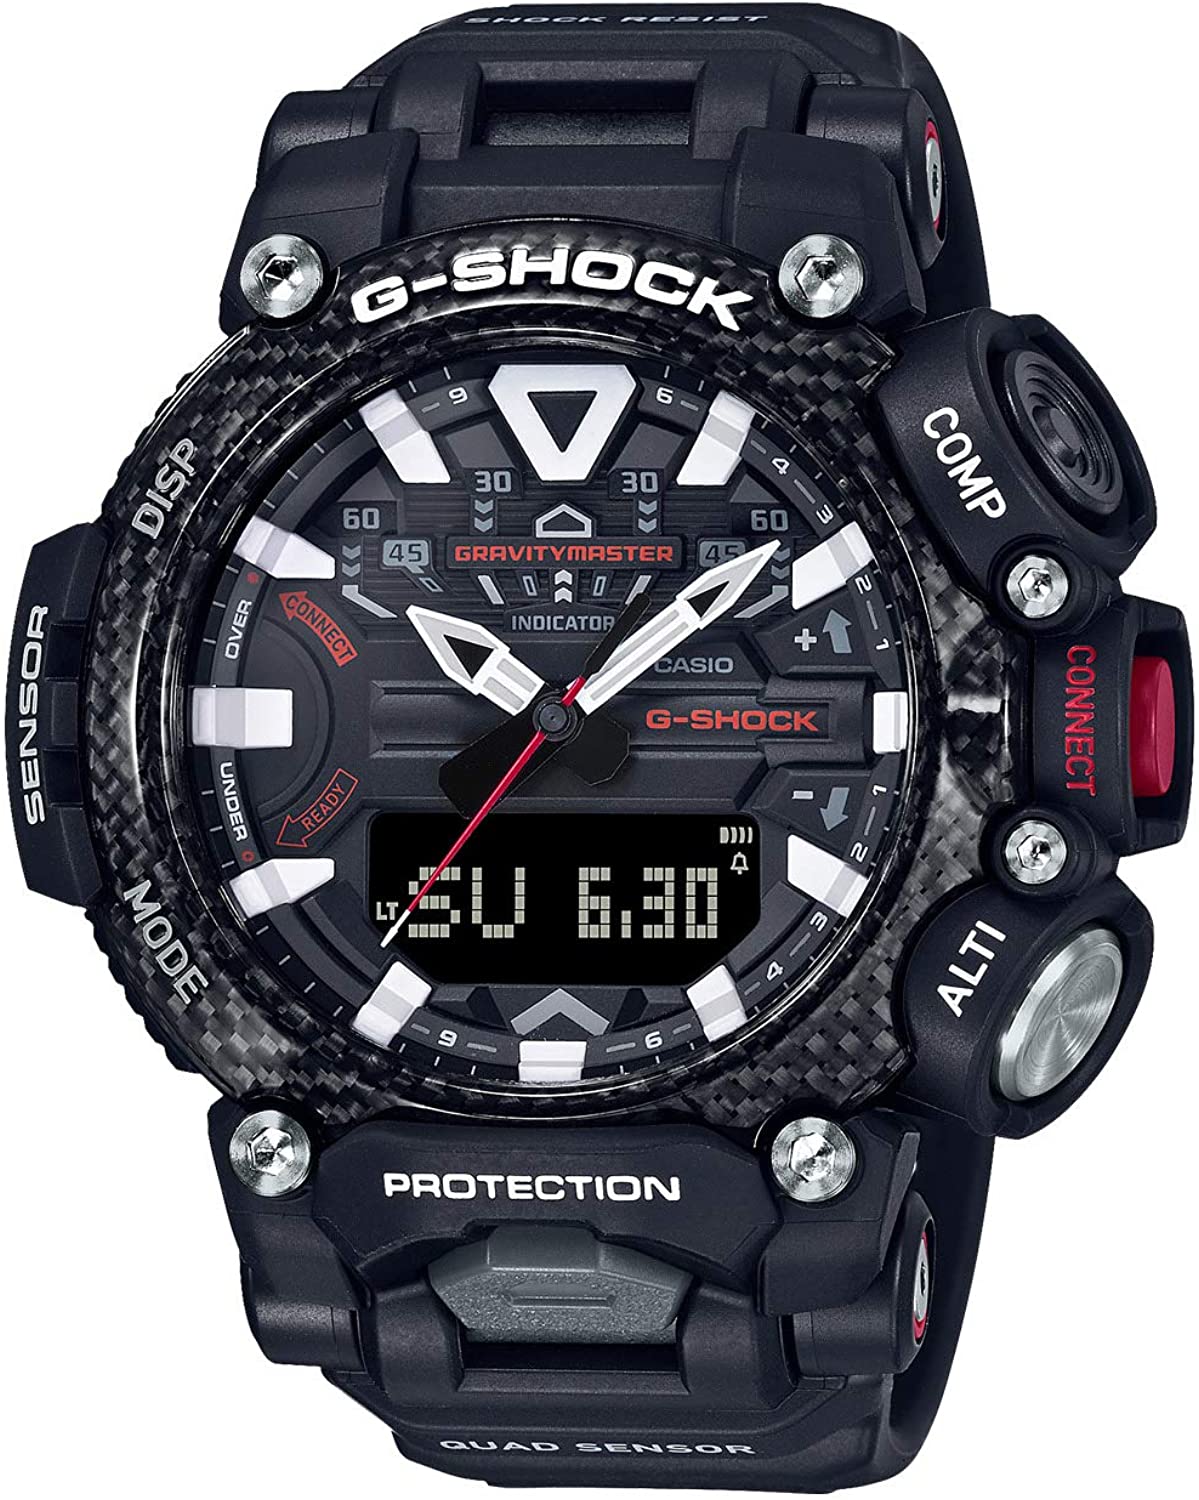 G-SHOCK GR-B200-1A GRAVITYMASTER グラビティマスター アナデジ メンズ腕時計 モバイルリンク ブラック CASIO カシオ Gショック ジーショック 逆輸入海外モデル